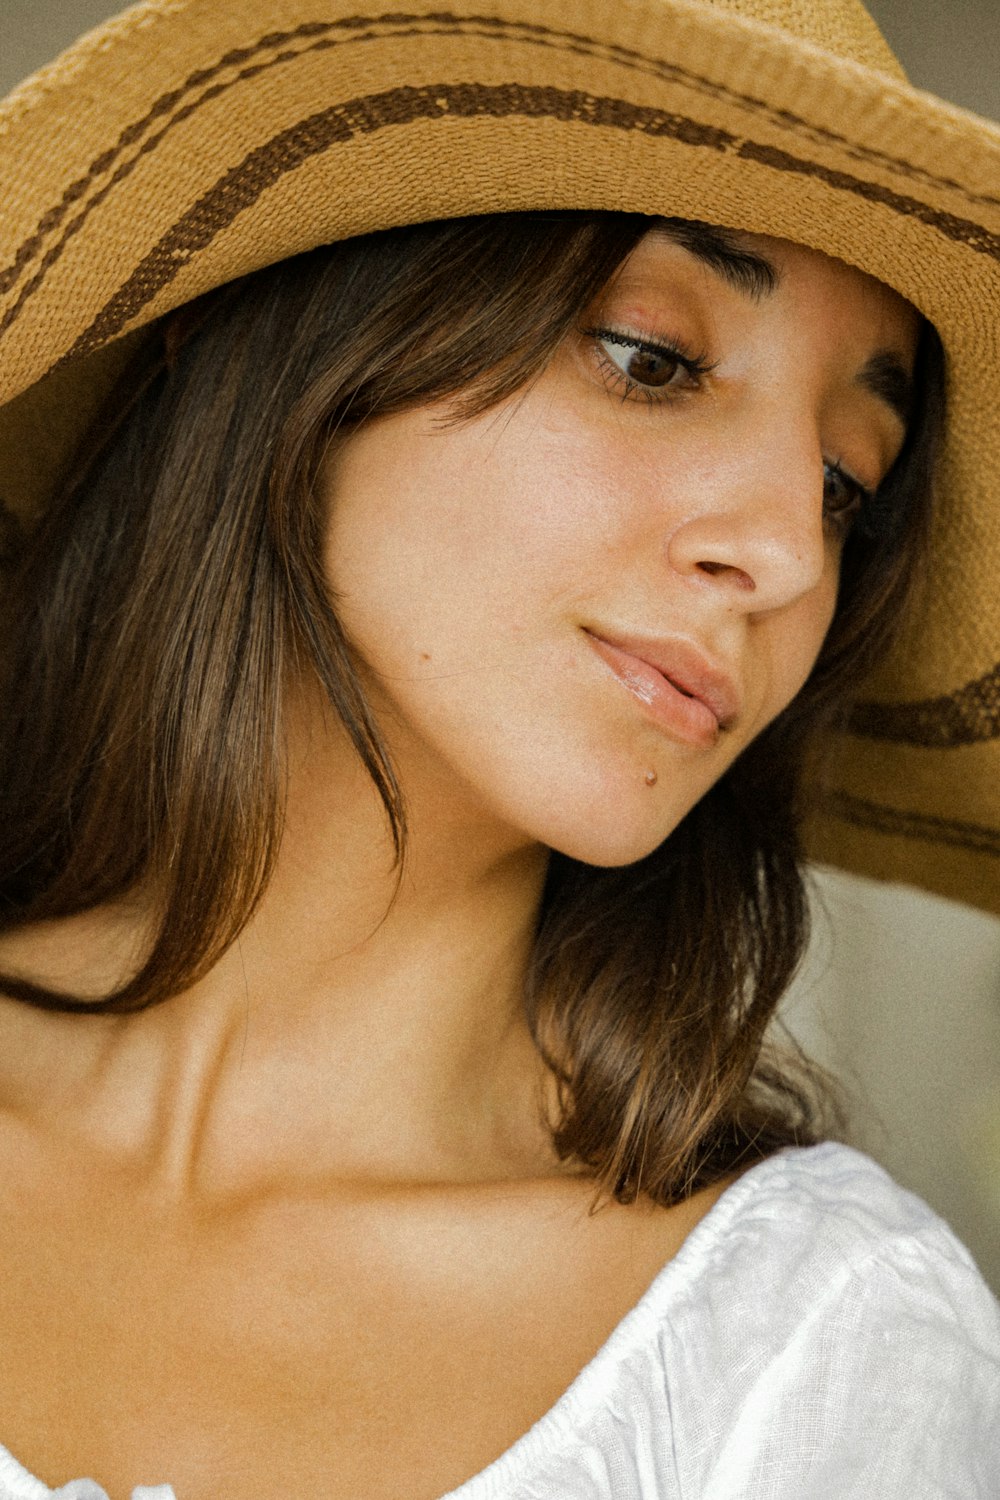 woman in white shirt wearing brown hat